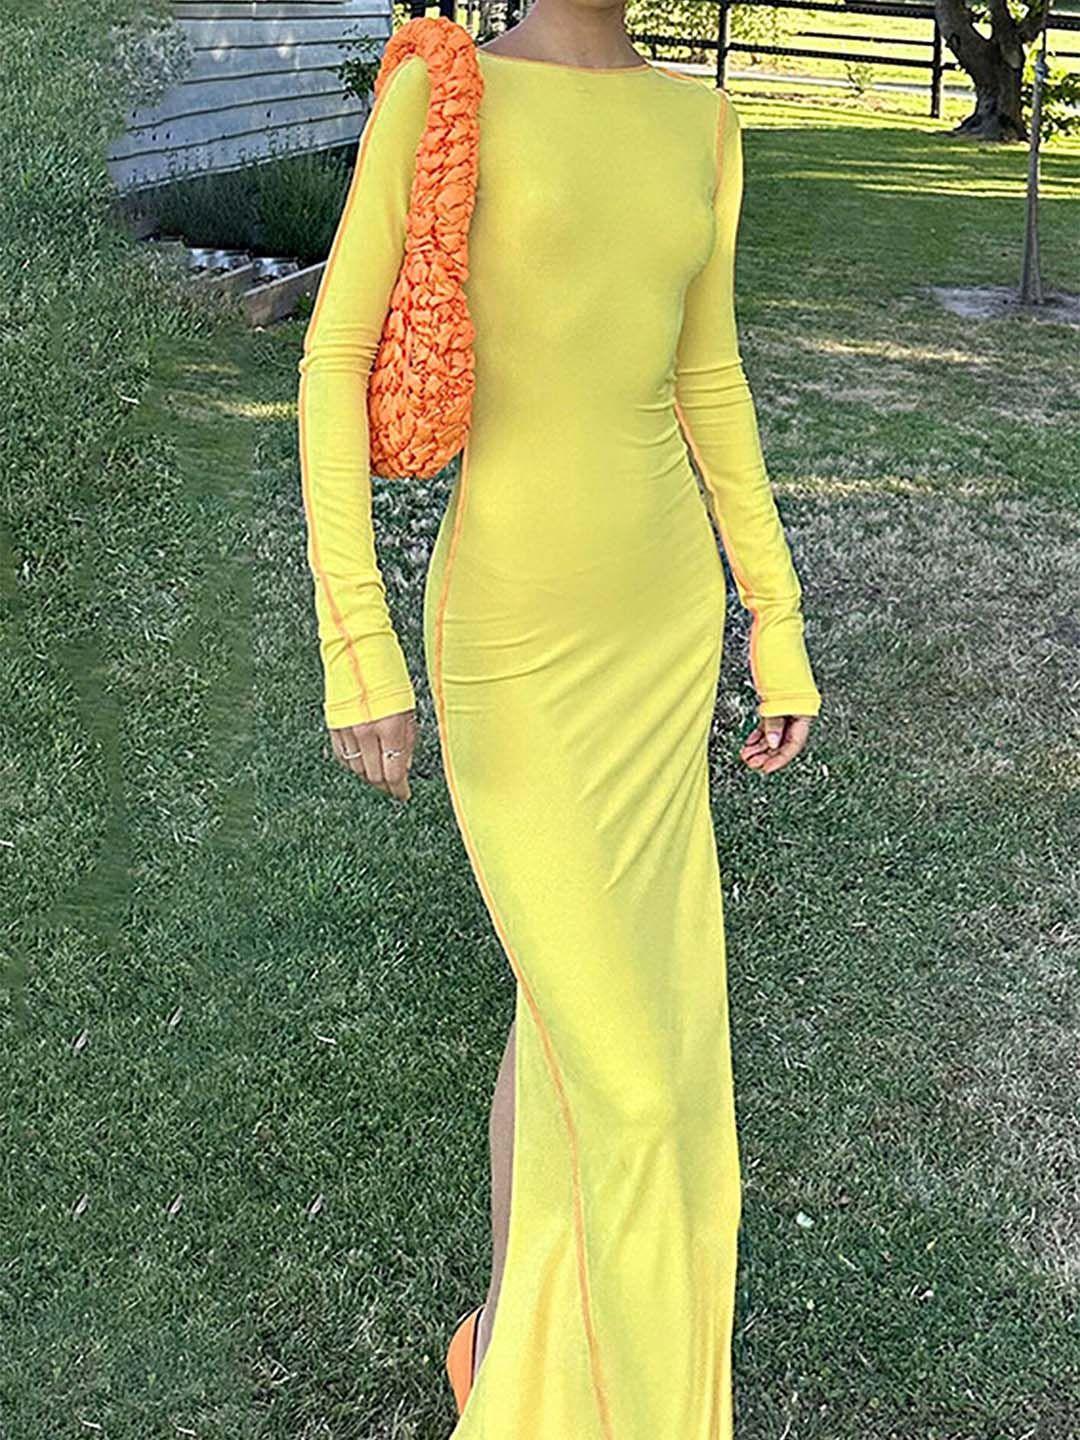 lulu & sky yellow dress